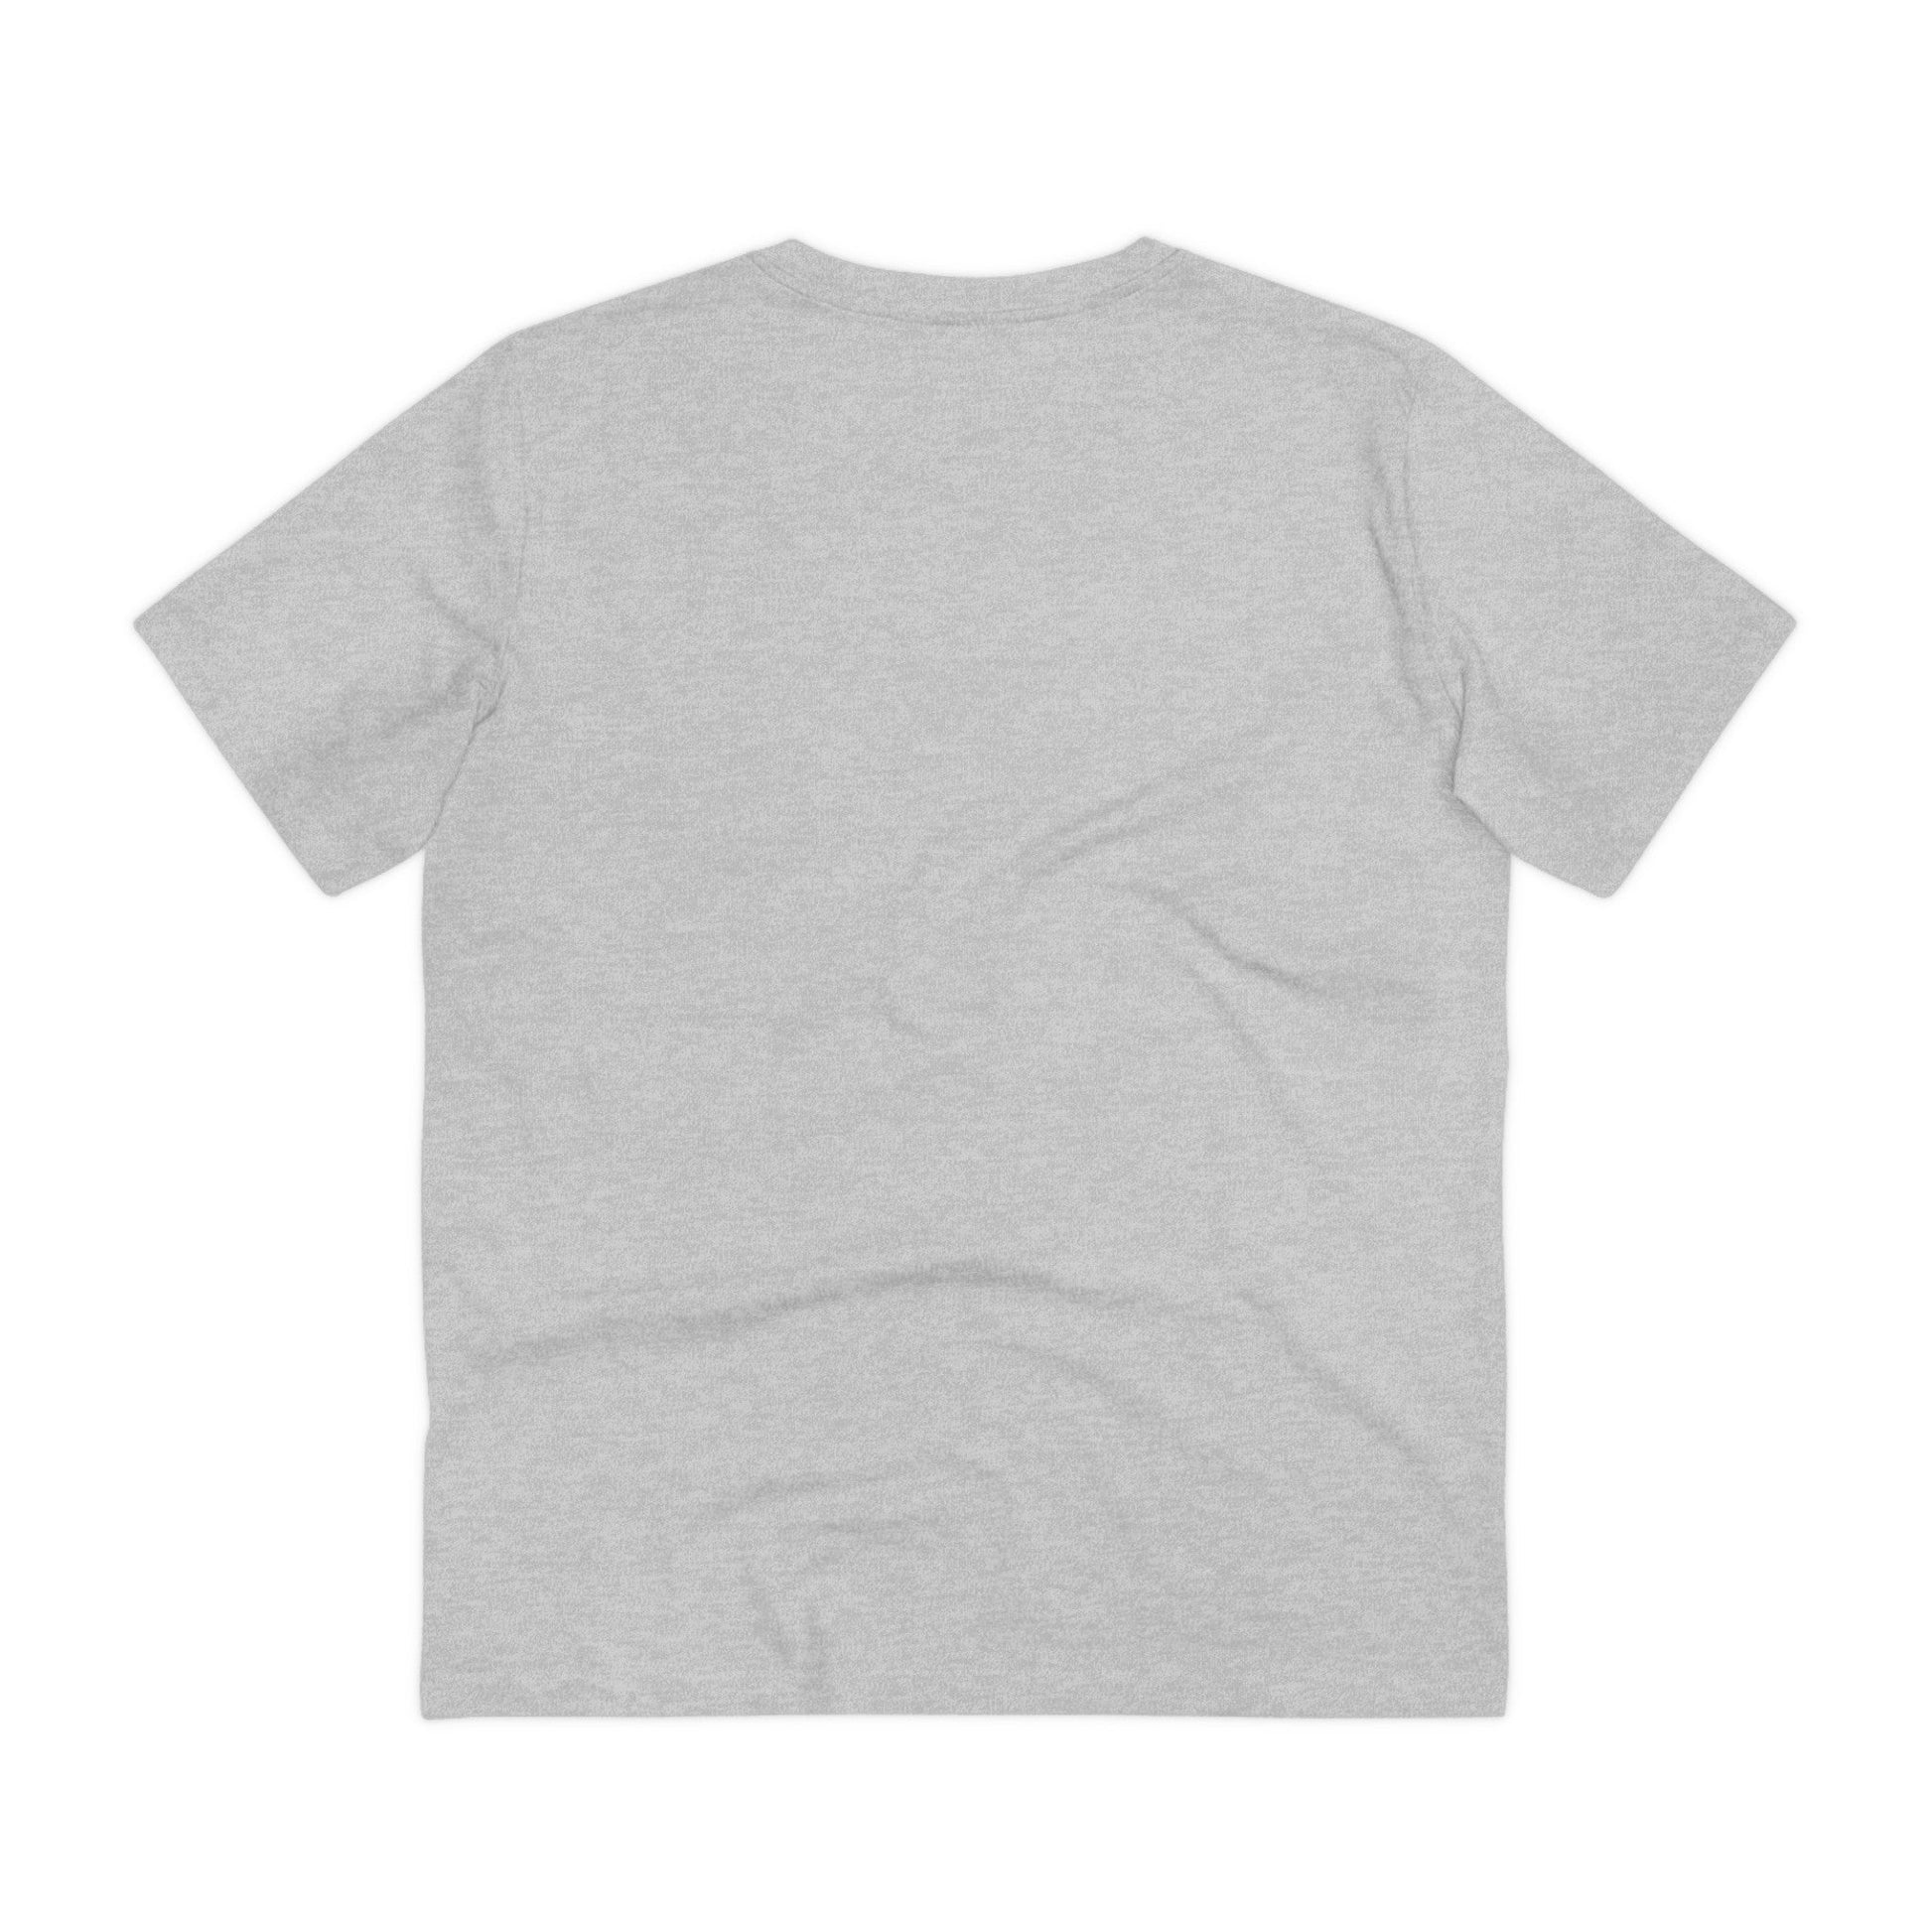 Printify T-Shirt Soccer - Grunge Sports - Front Design